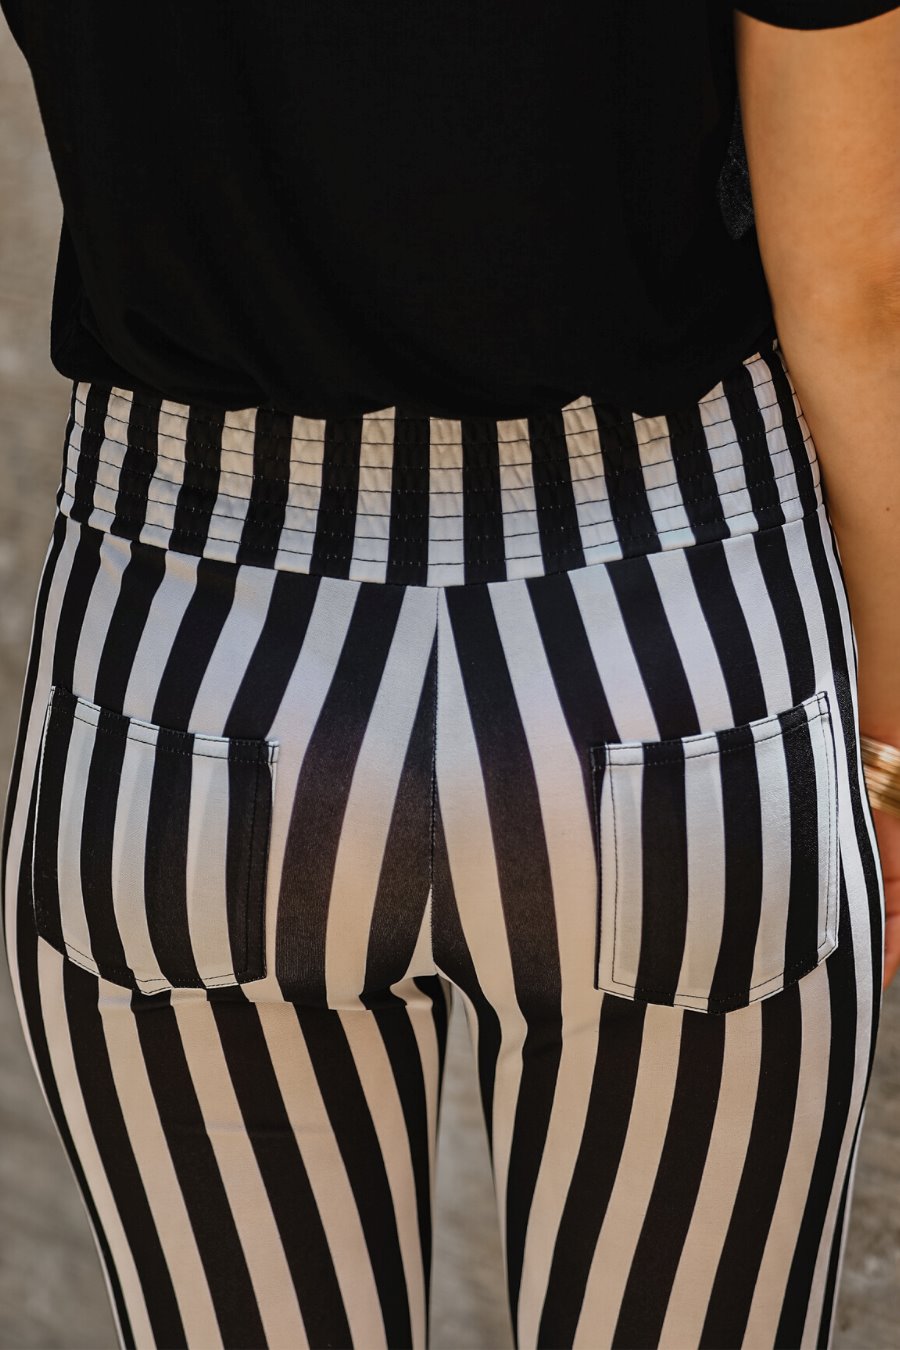 Stay Rowdy Striped Pants - Jess Lea Boutique